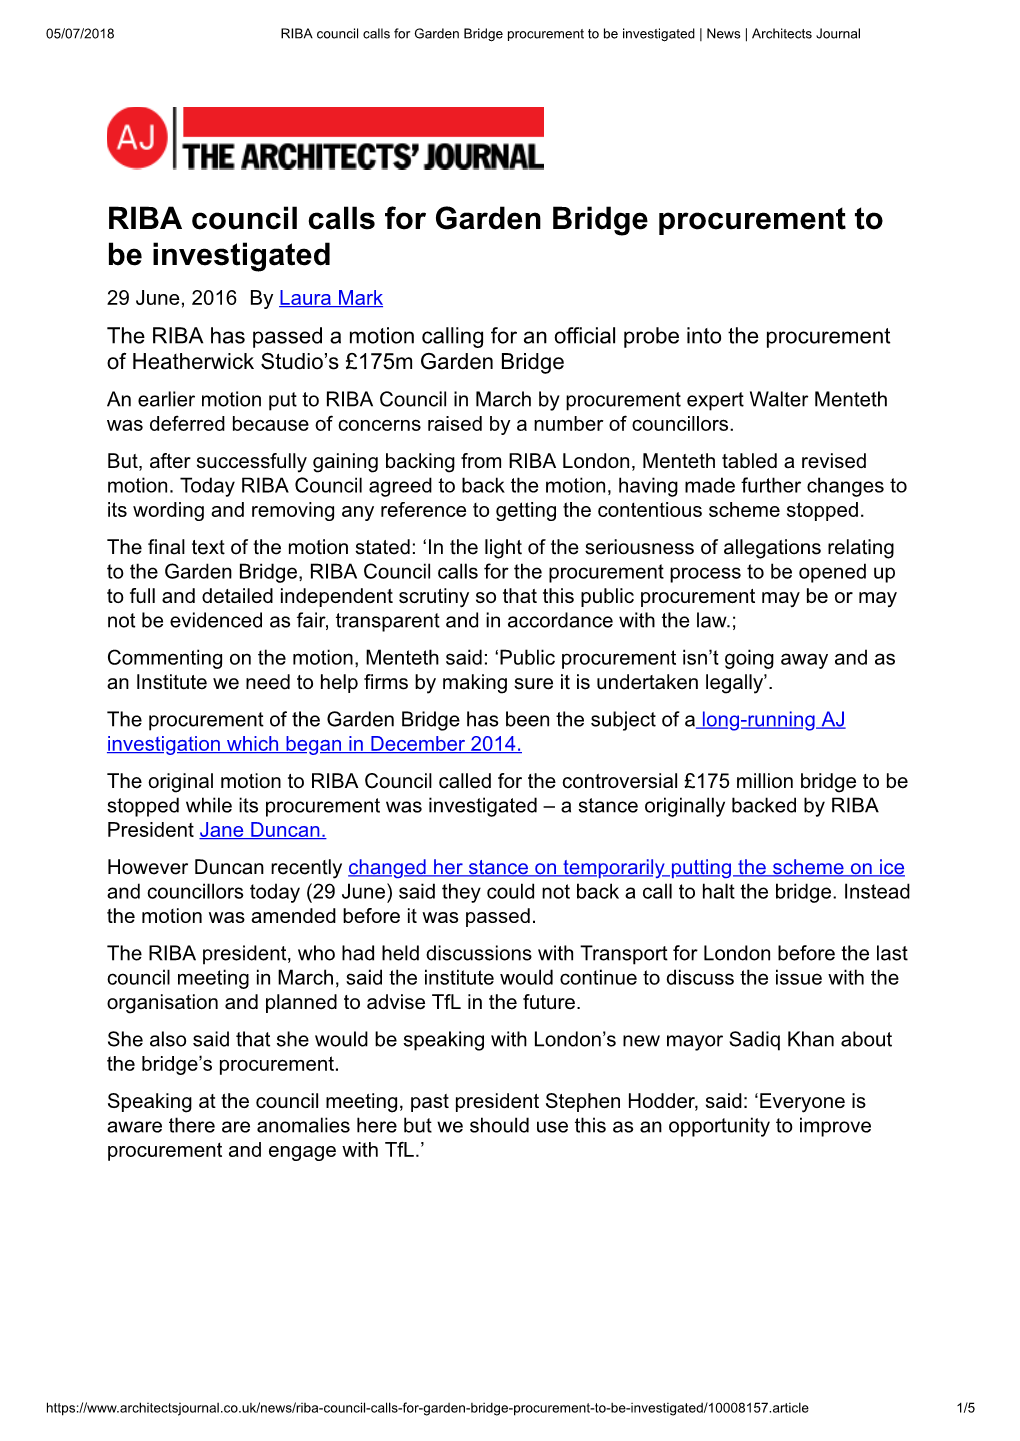 16-06-29 AJ RIBA Council Calls for Garden Bridge Procurement to Be